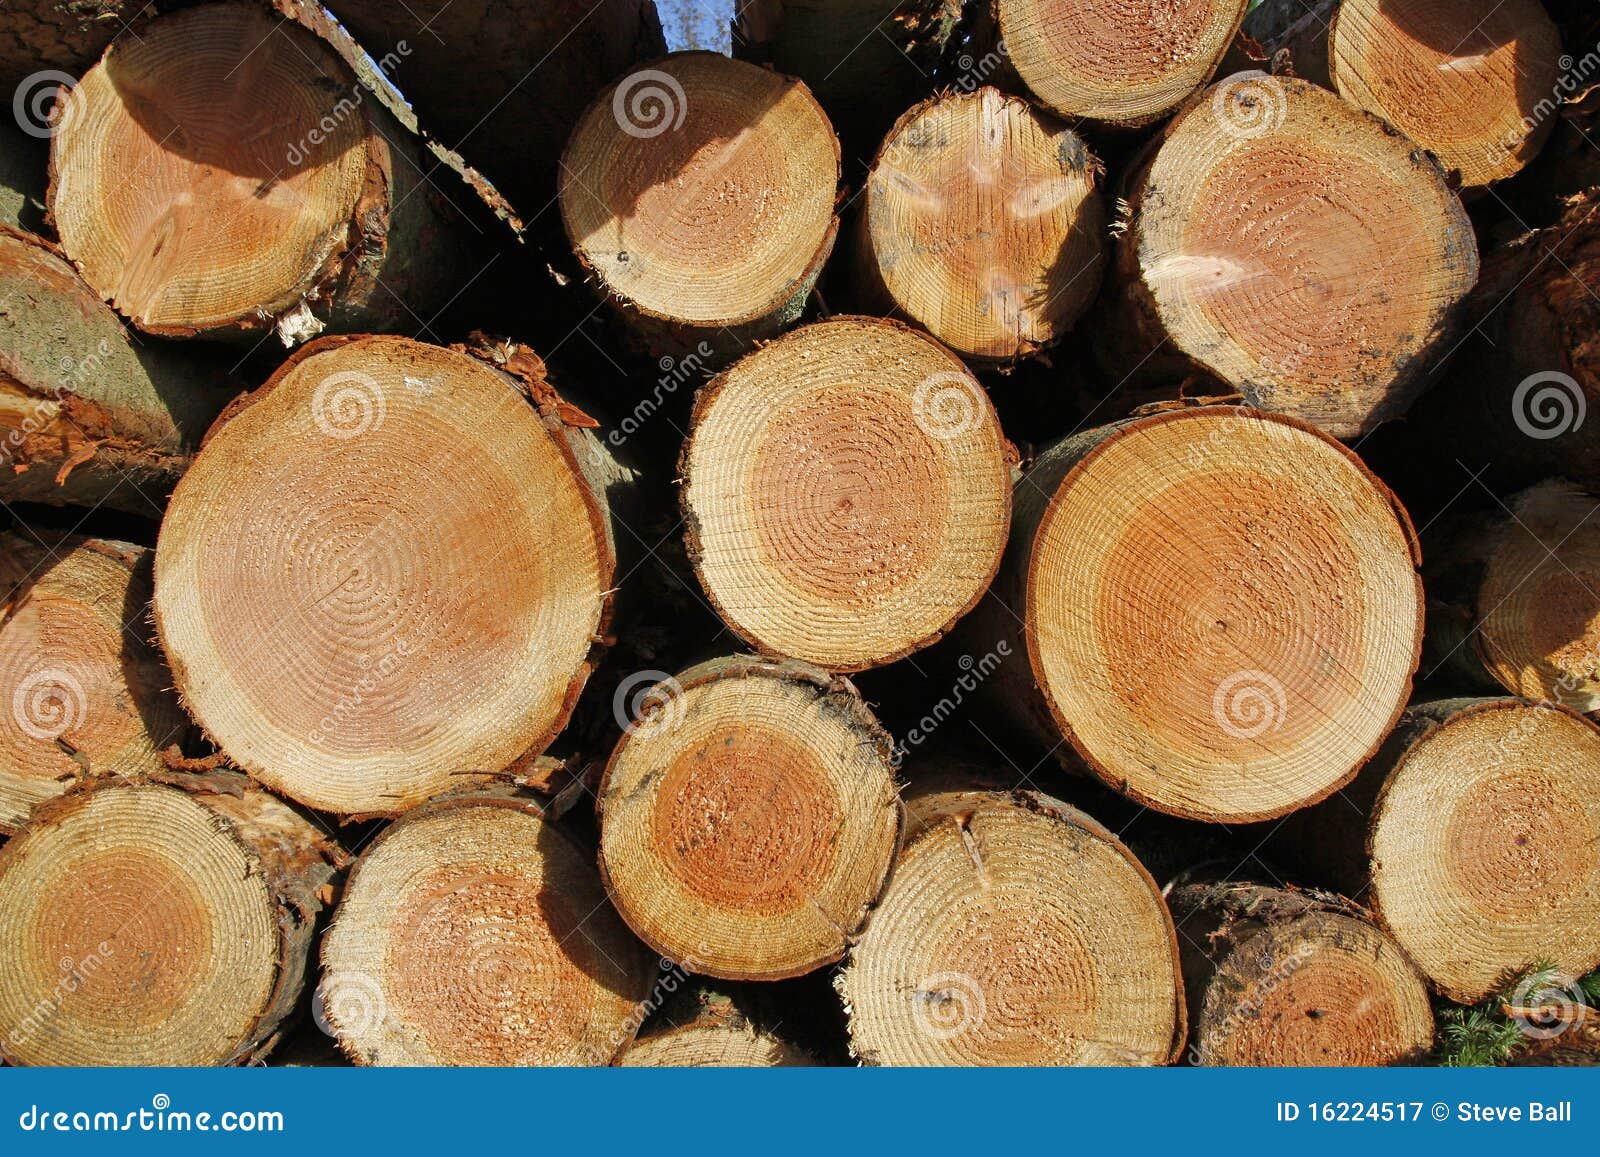 stockpile of logging timber